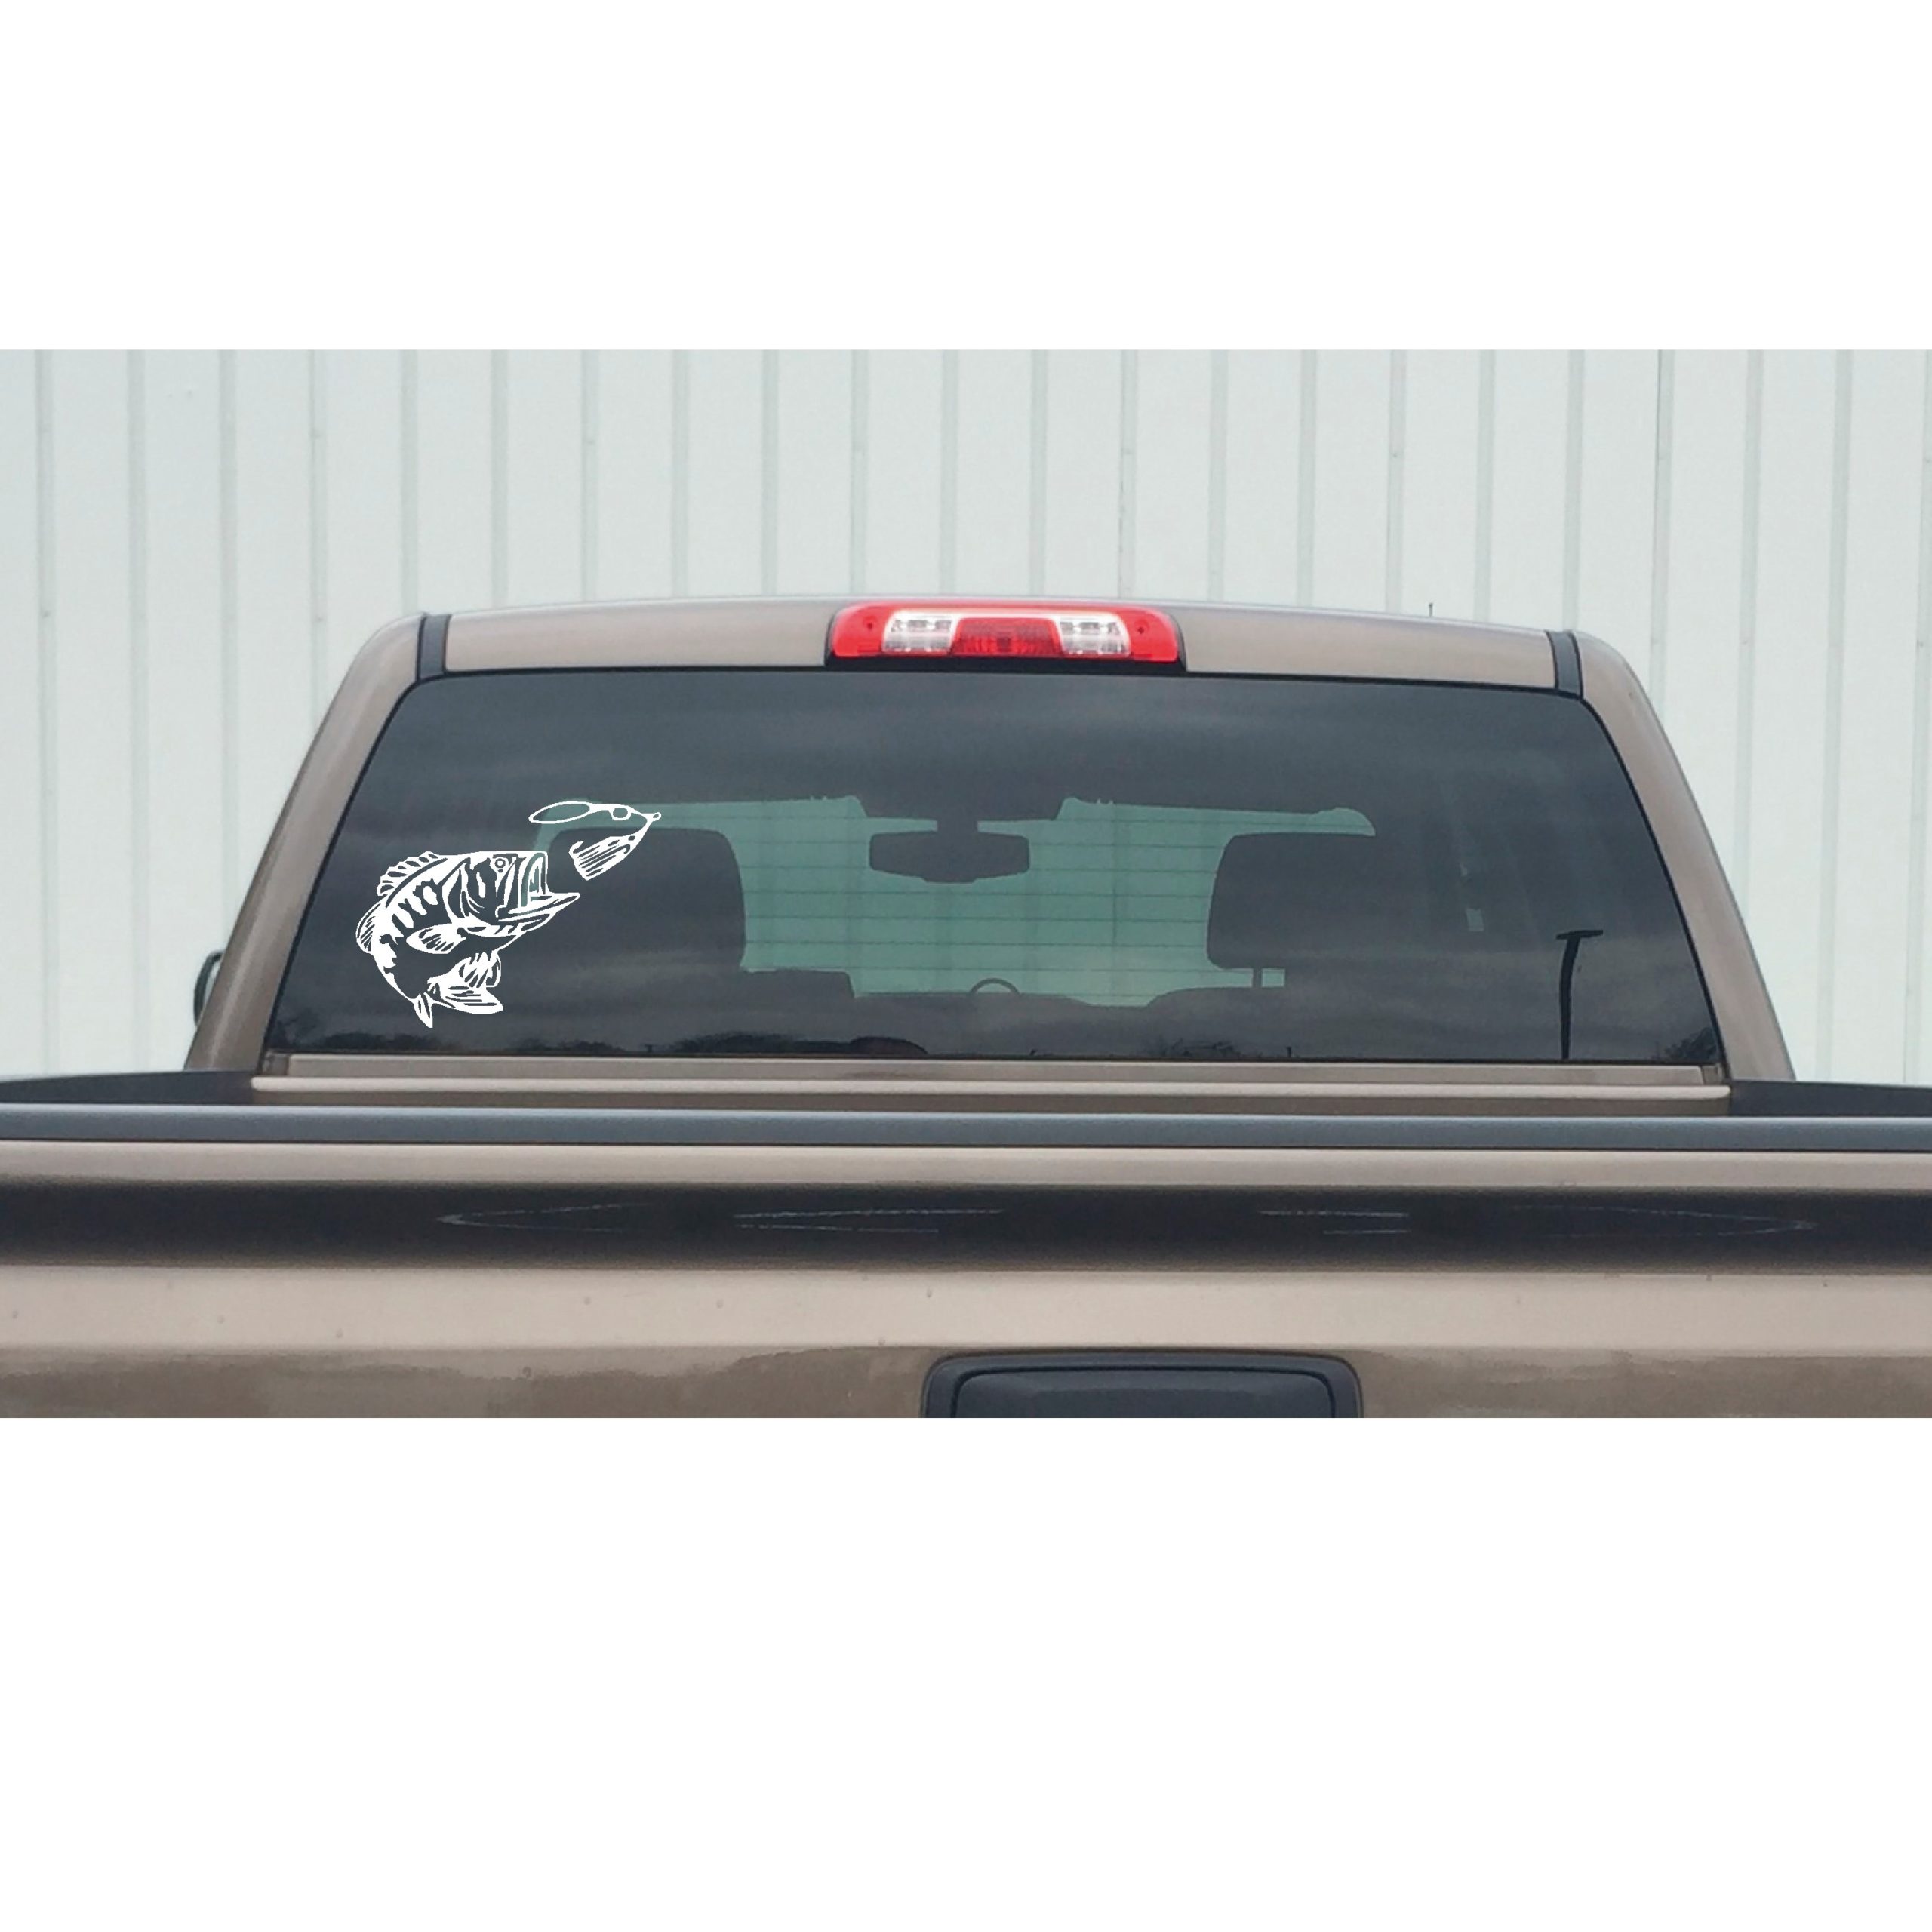 PENN Decal / 5 Vinyl Vehicle FIshing Logo Reels Tackle Gear Sticker si